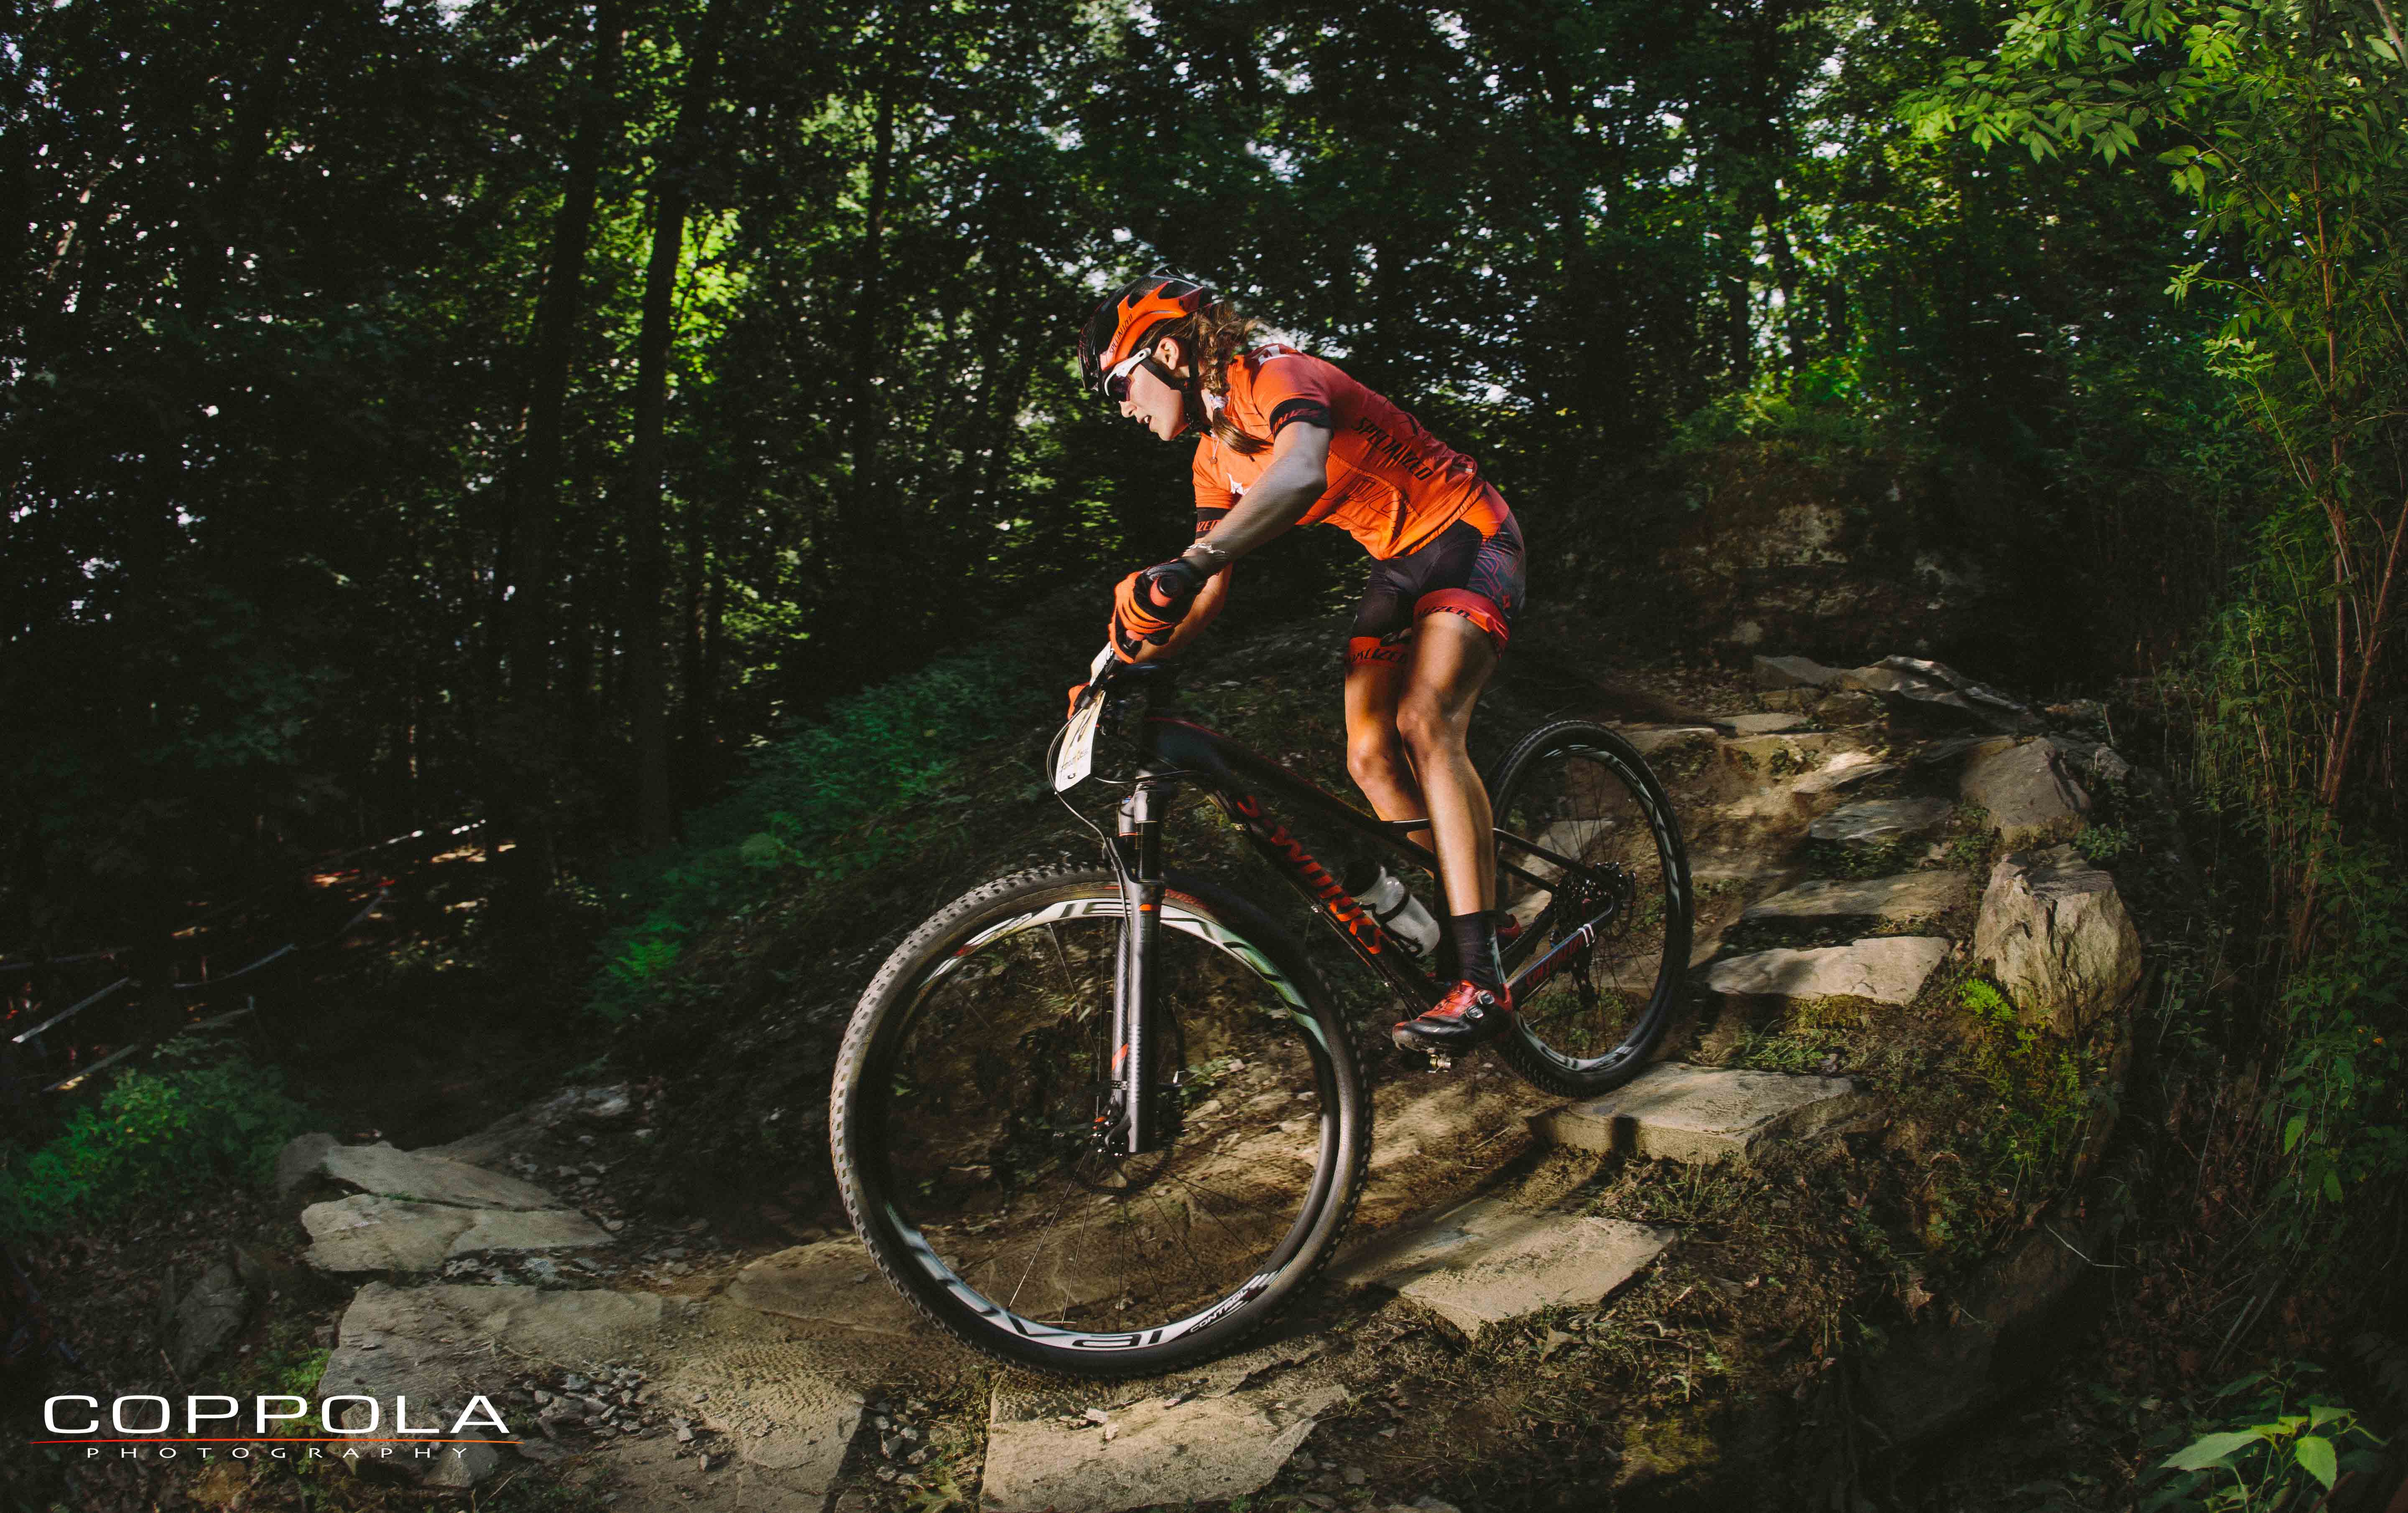 Coppola Photography: Kate Courtney, National Champion Mountain Biker, on location athlete action shoot. Adventure, lifestyle, portrait, people, cyclist. mountain bike images